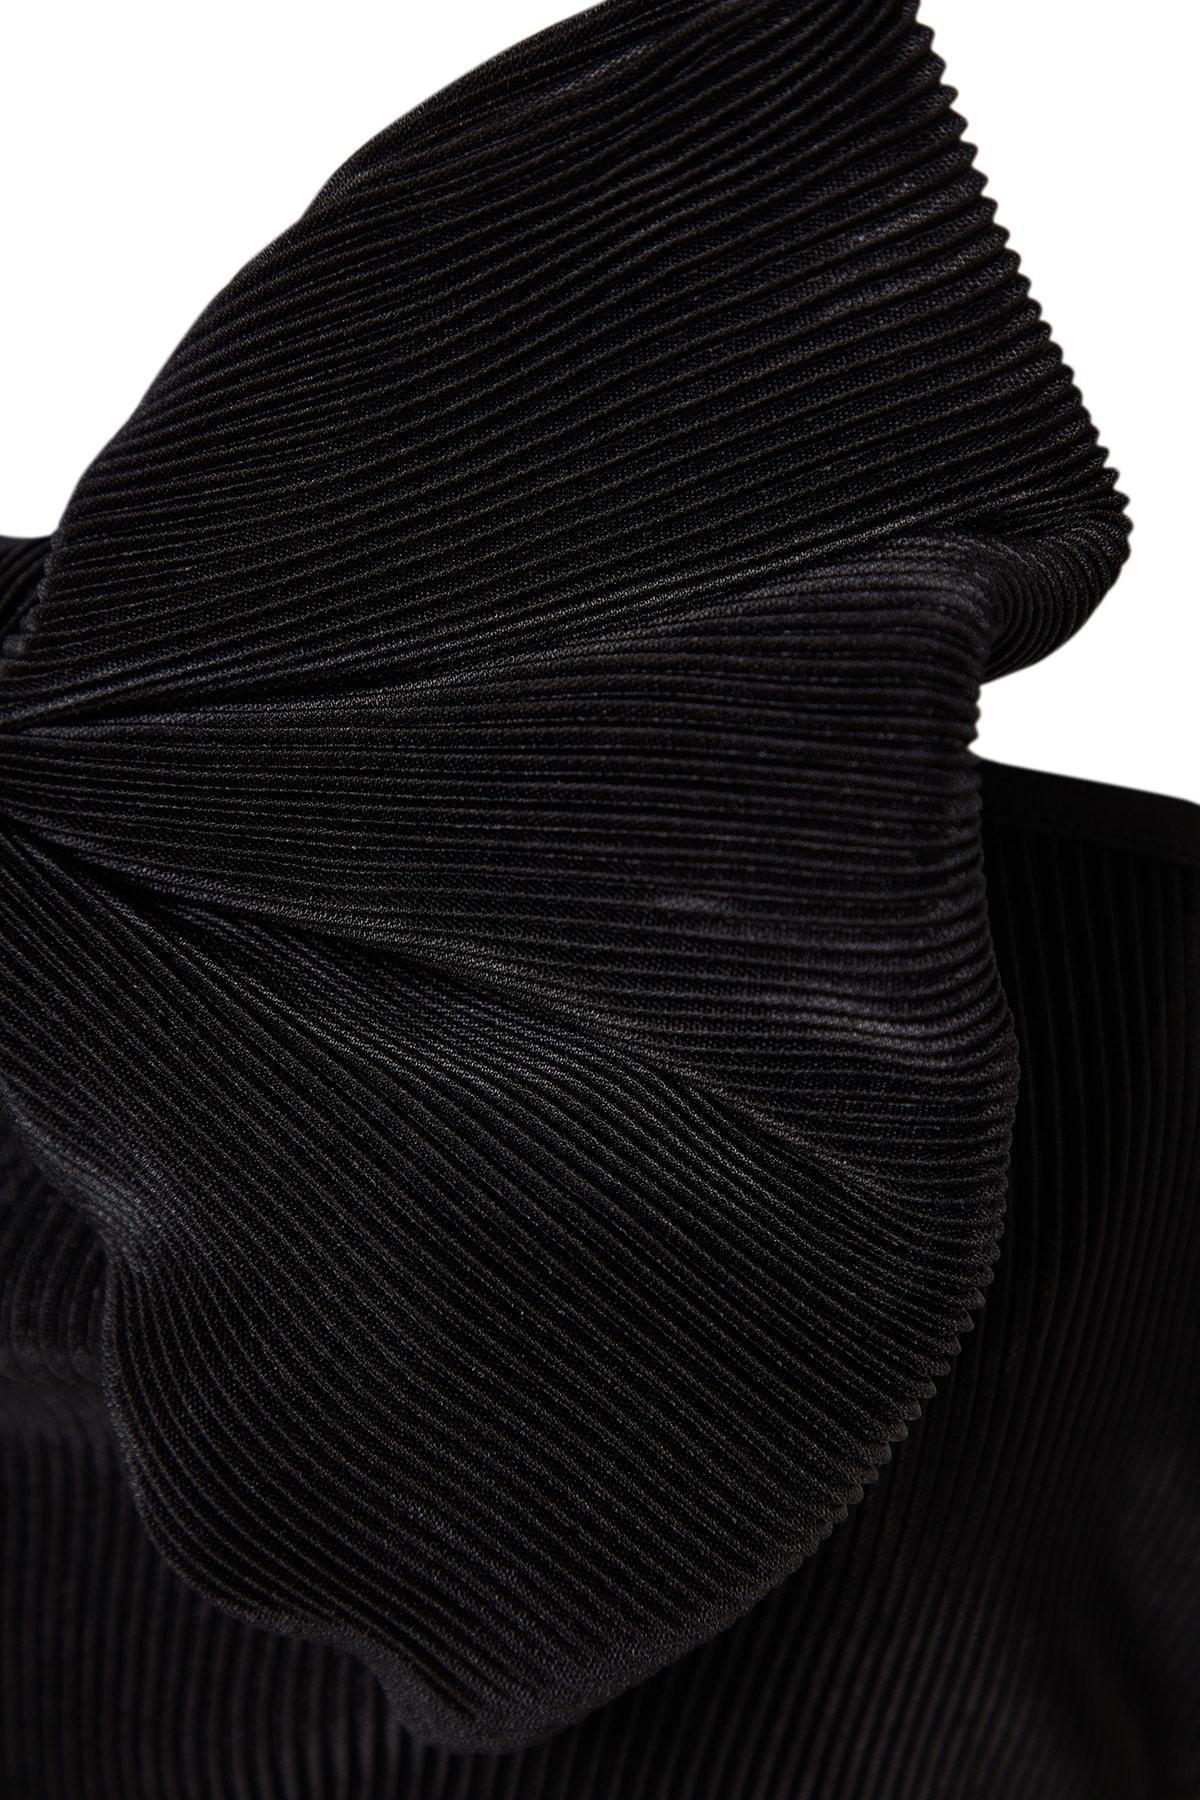 Trendyol - Black Knitted Textured Crop Top